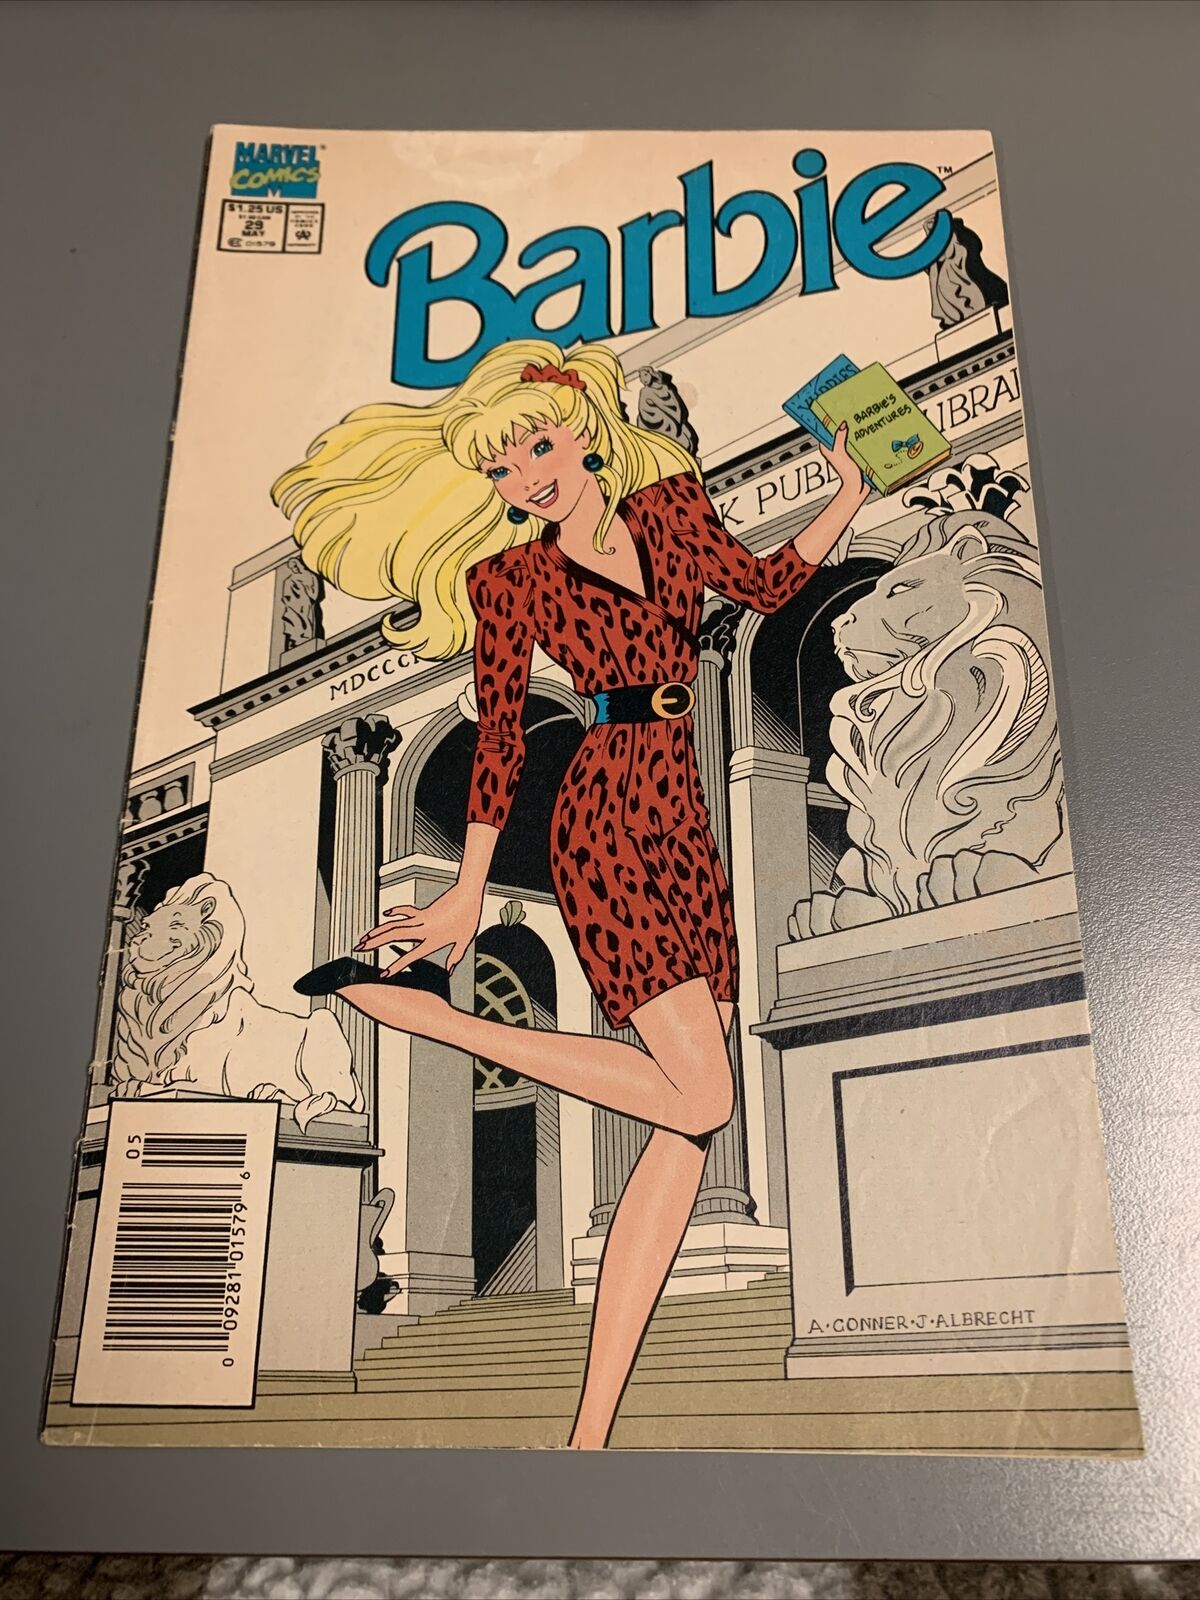 BARBIE #29 NEWSSTAND VARIANT AMANDA CONNER COVER ART MARVEL COMICS 1993